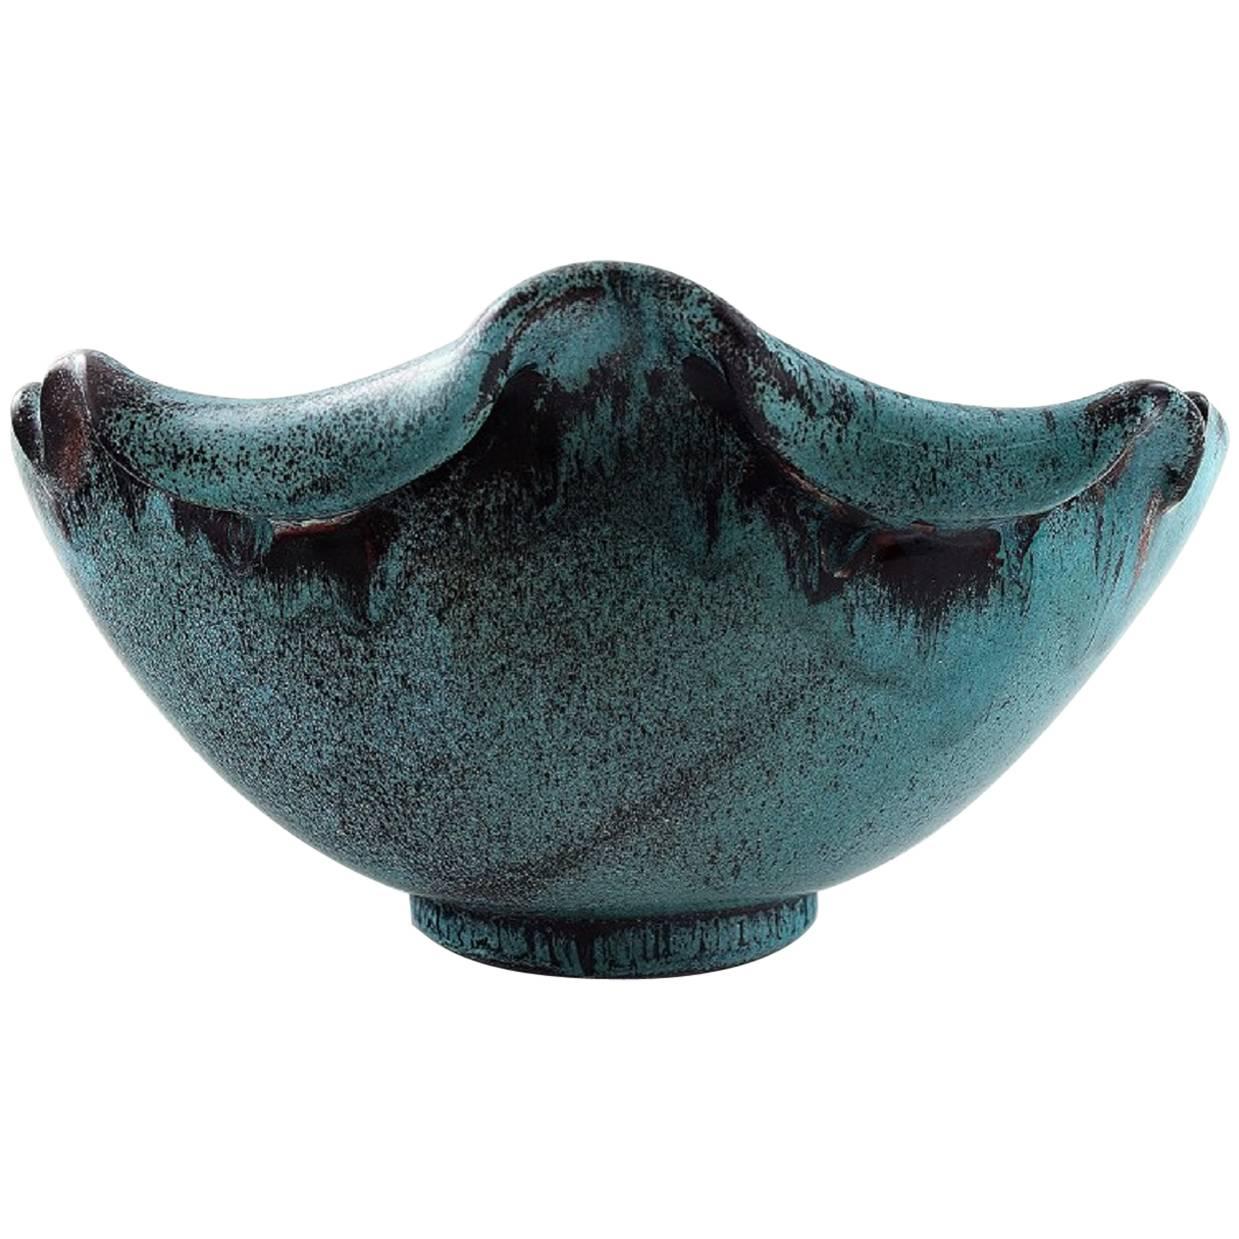 Kähler, HAK, Glazed Ceramic Bowl, 1930s, Designed by Svend Hammershøi